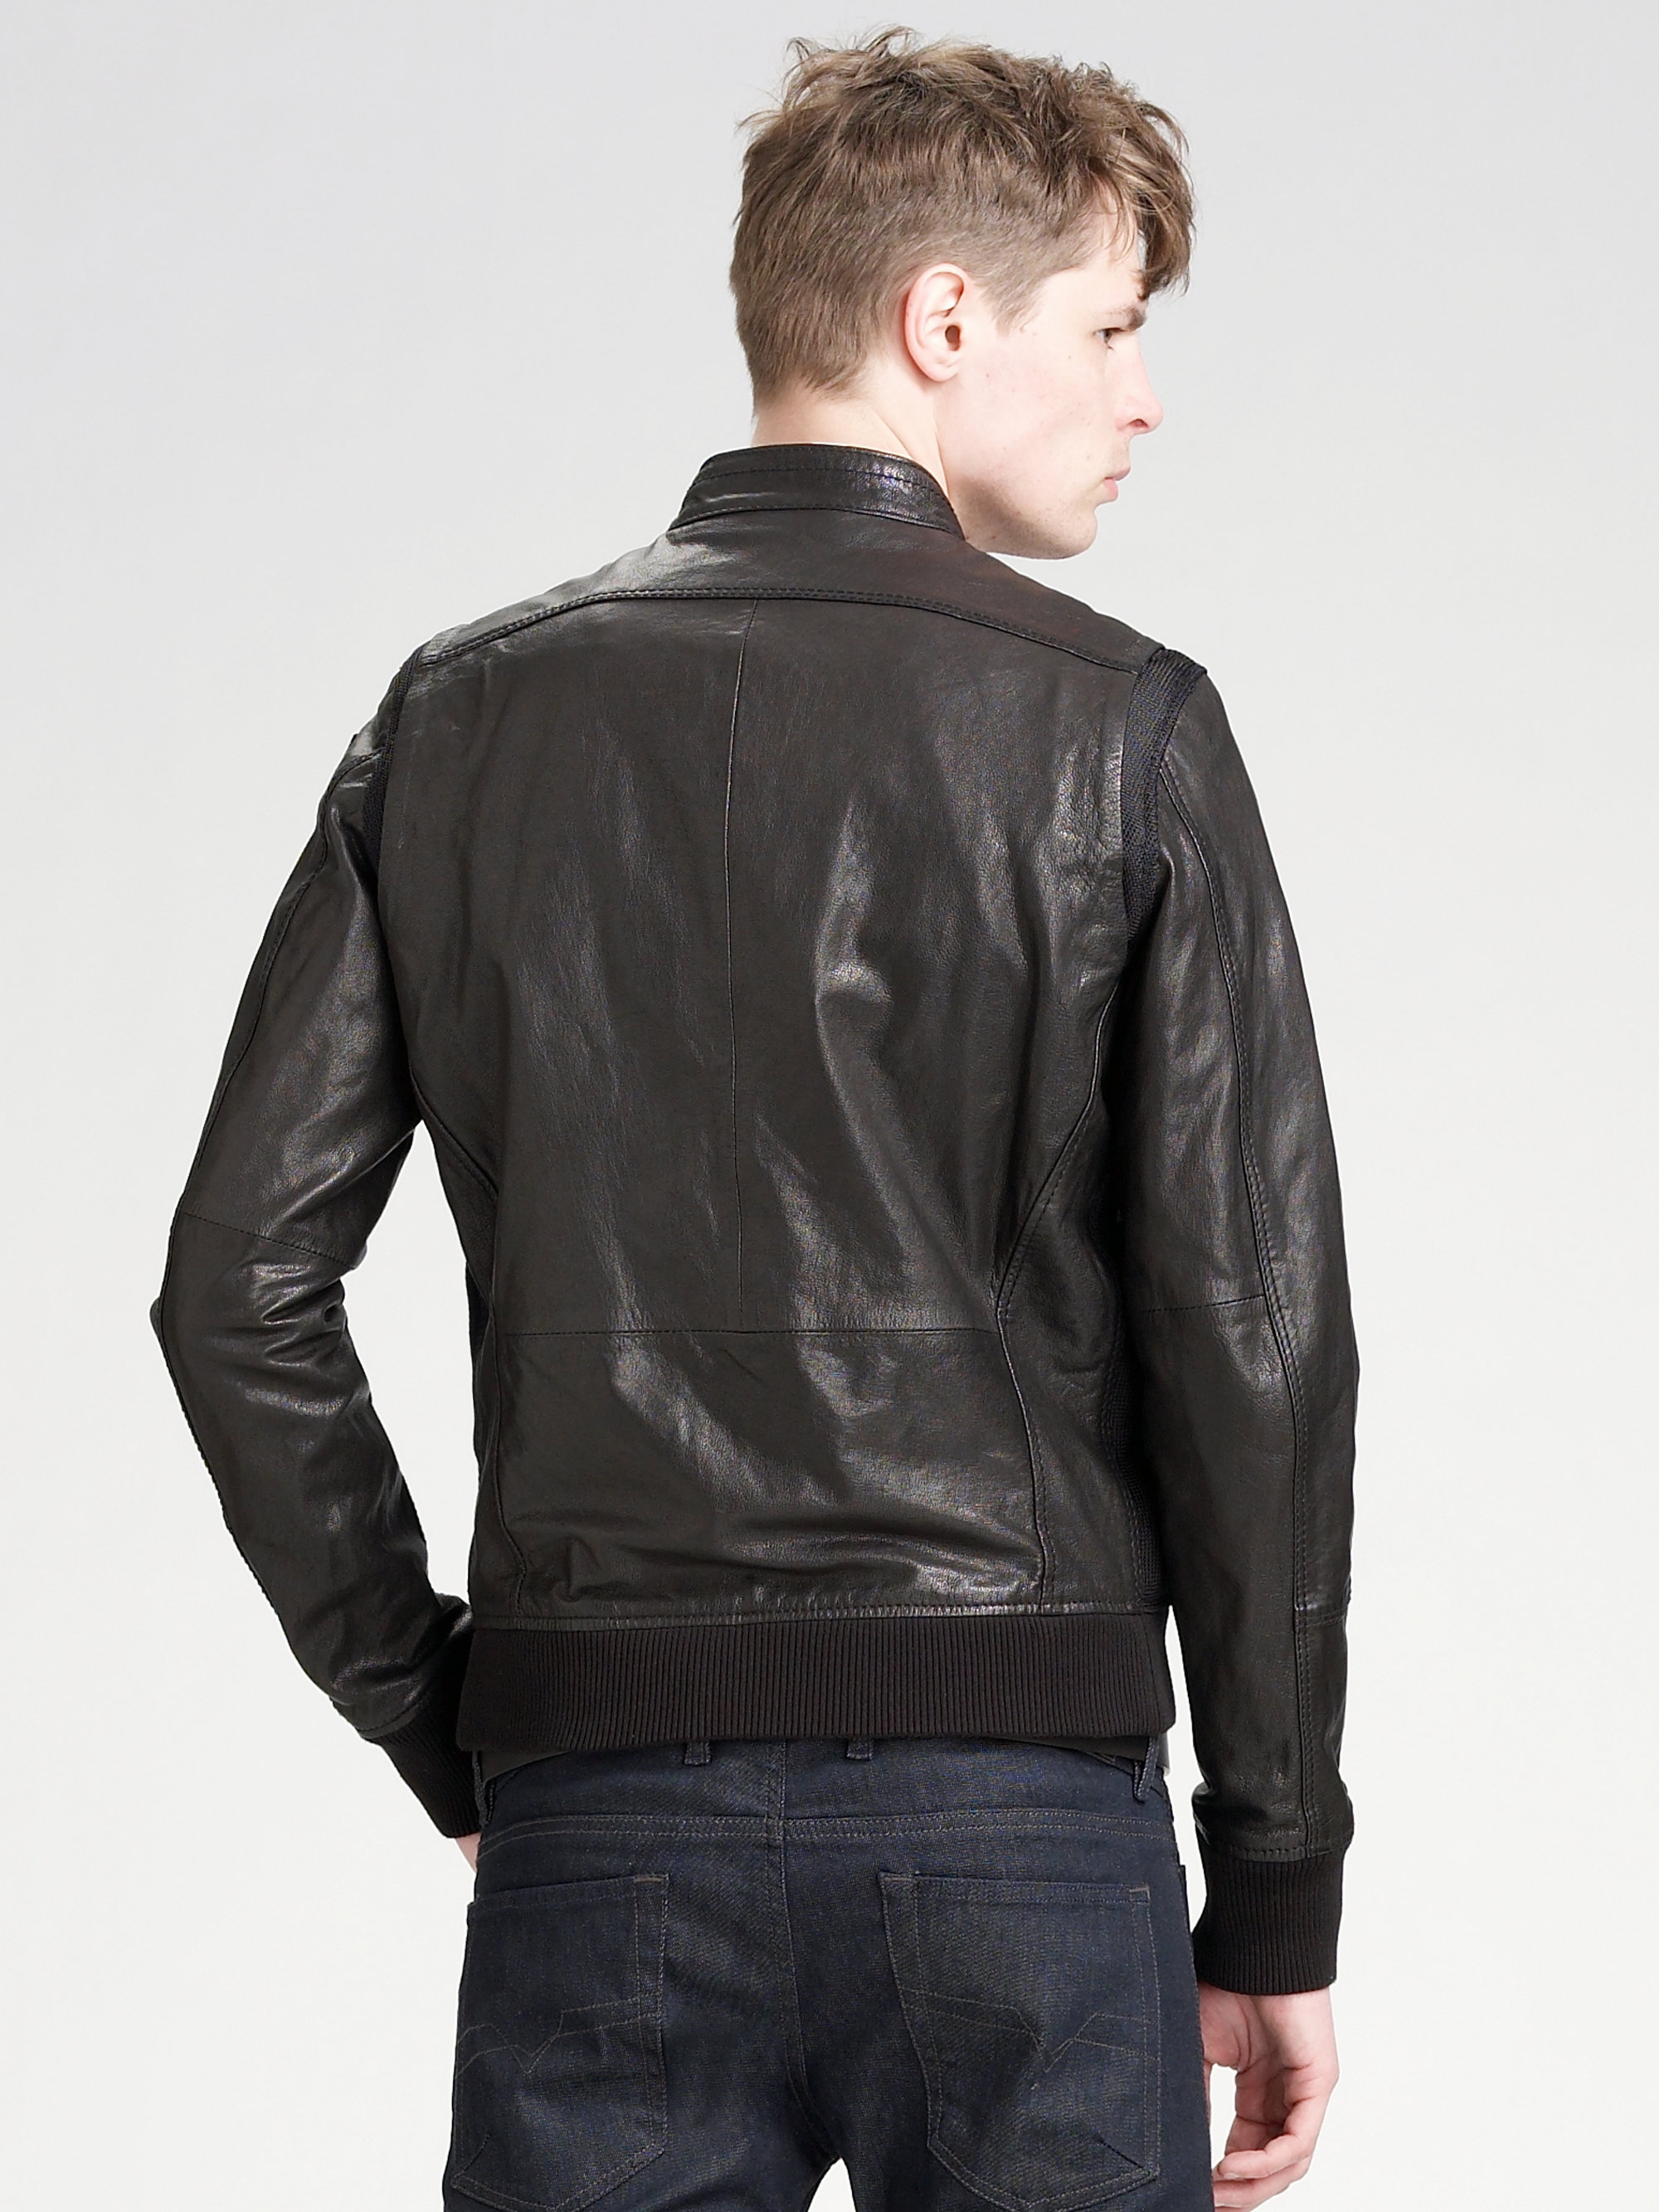 Lyst - Diesel Leather Jacket in Black for Men